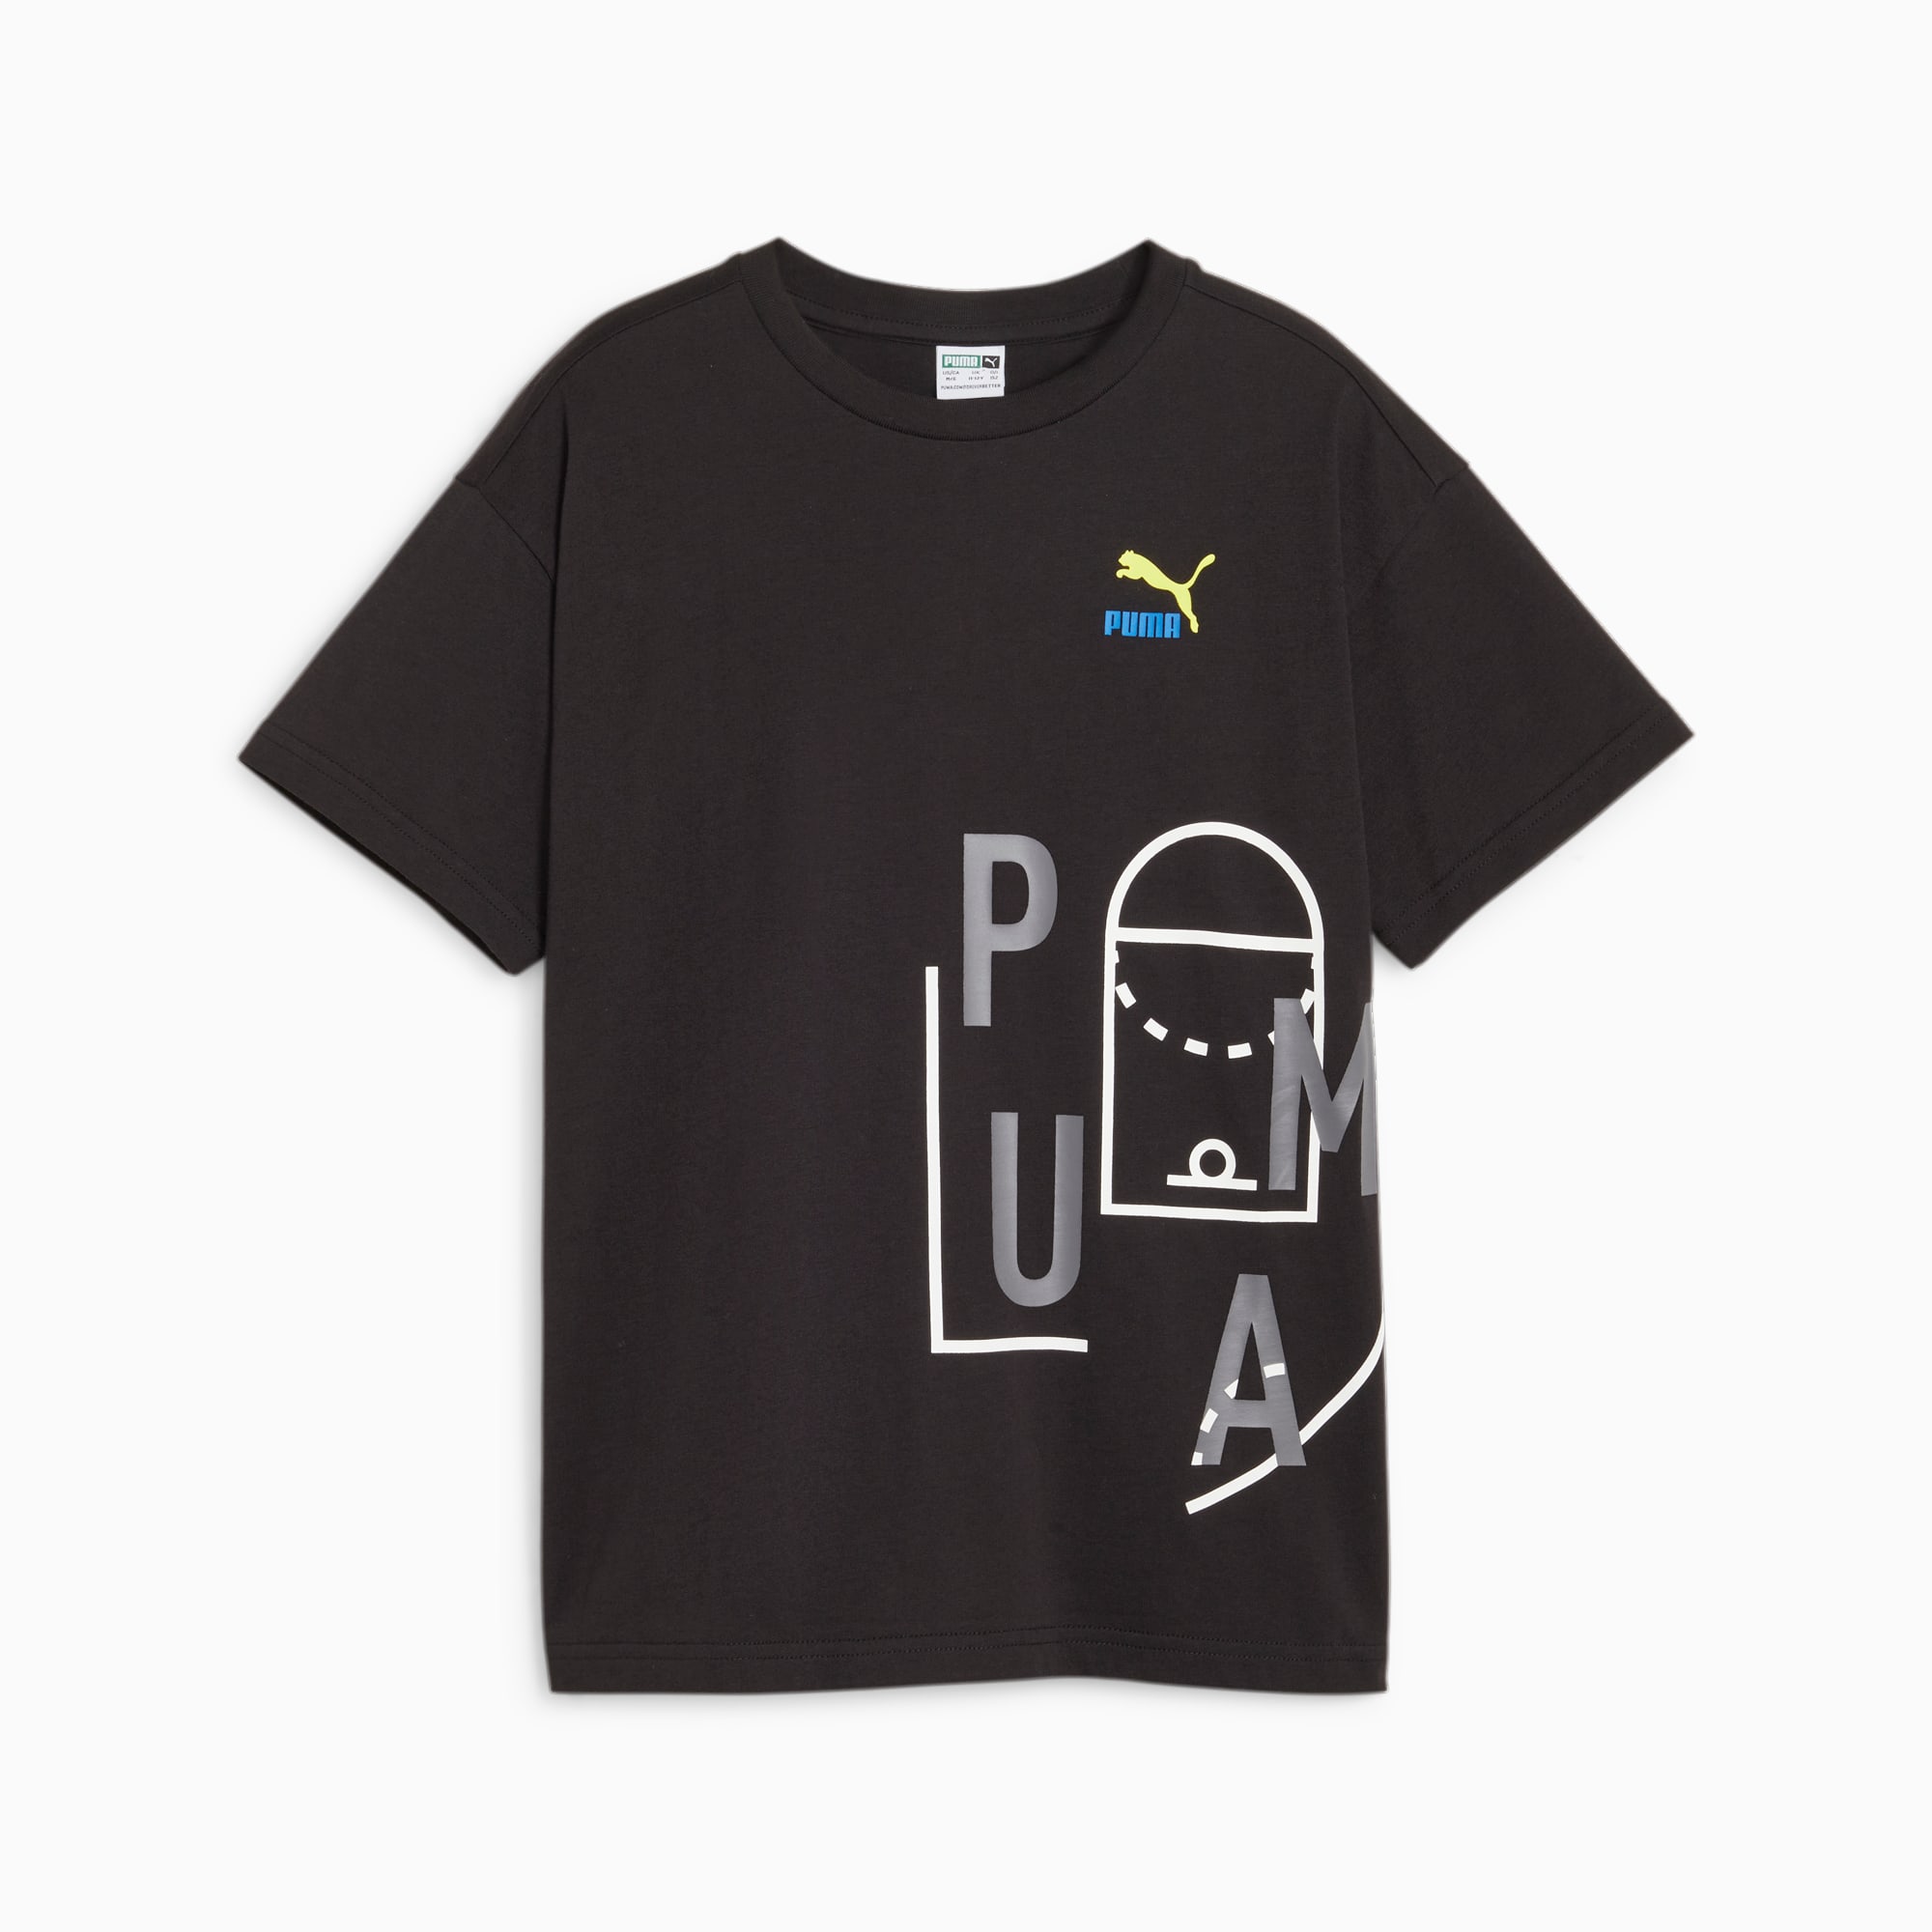 PUMA Classics Ftr Baller Youth Logo T-Shirt, Black